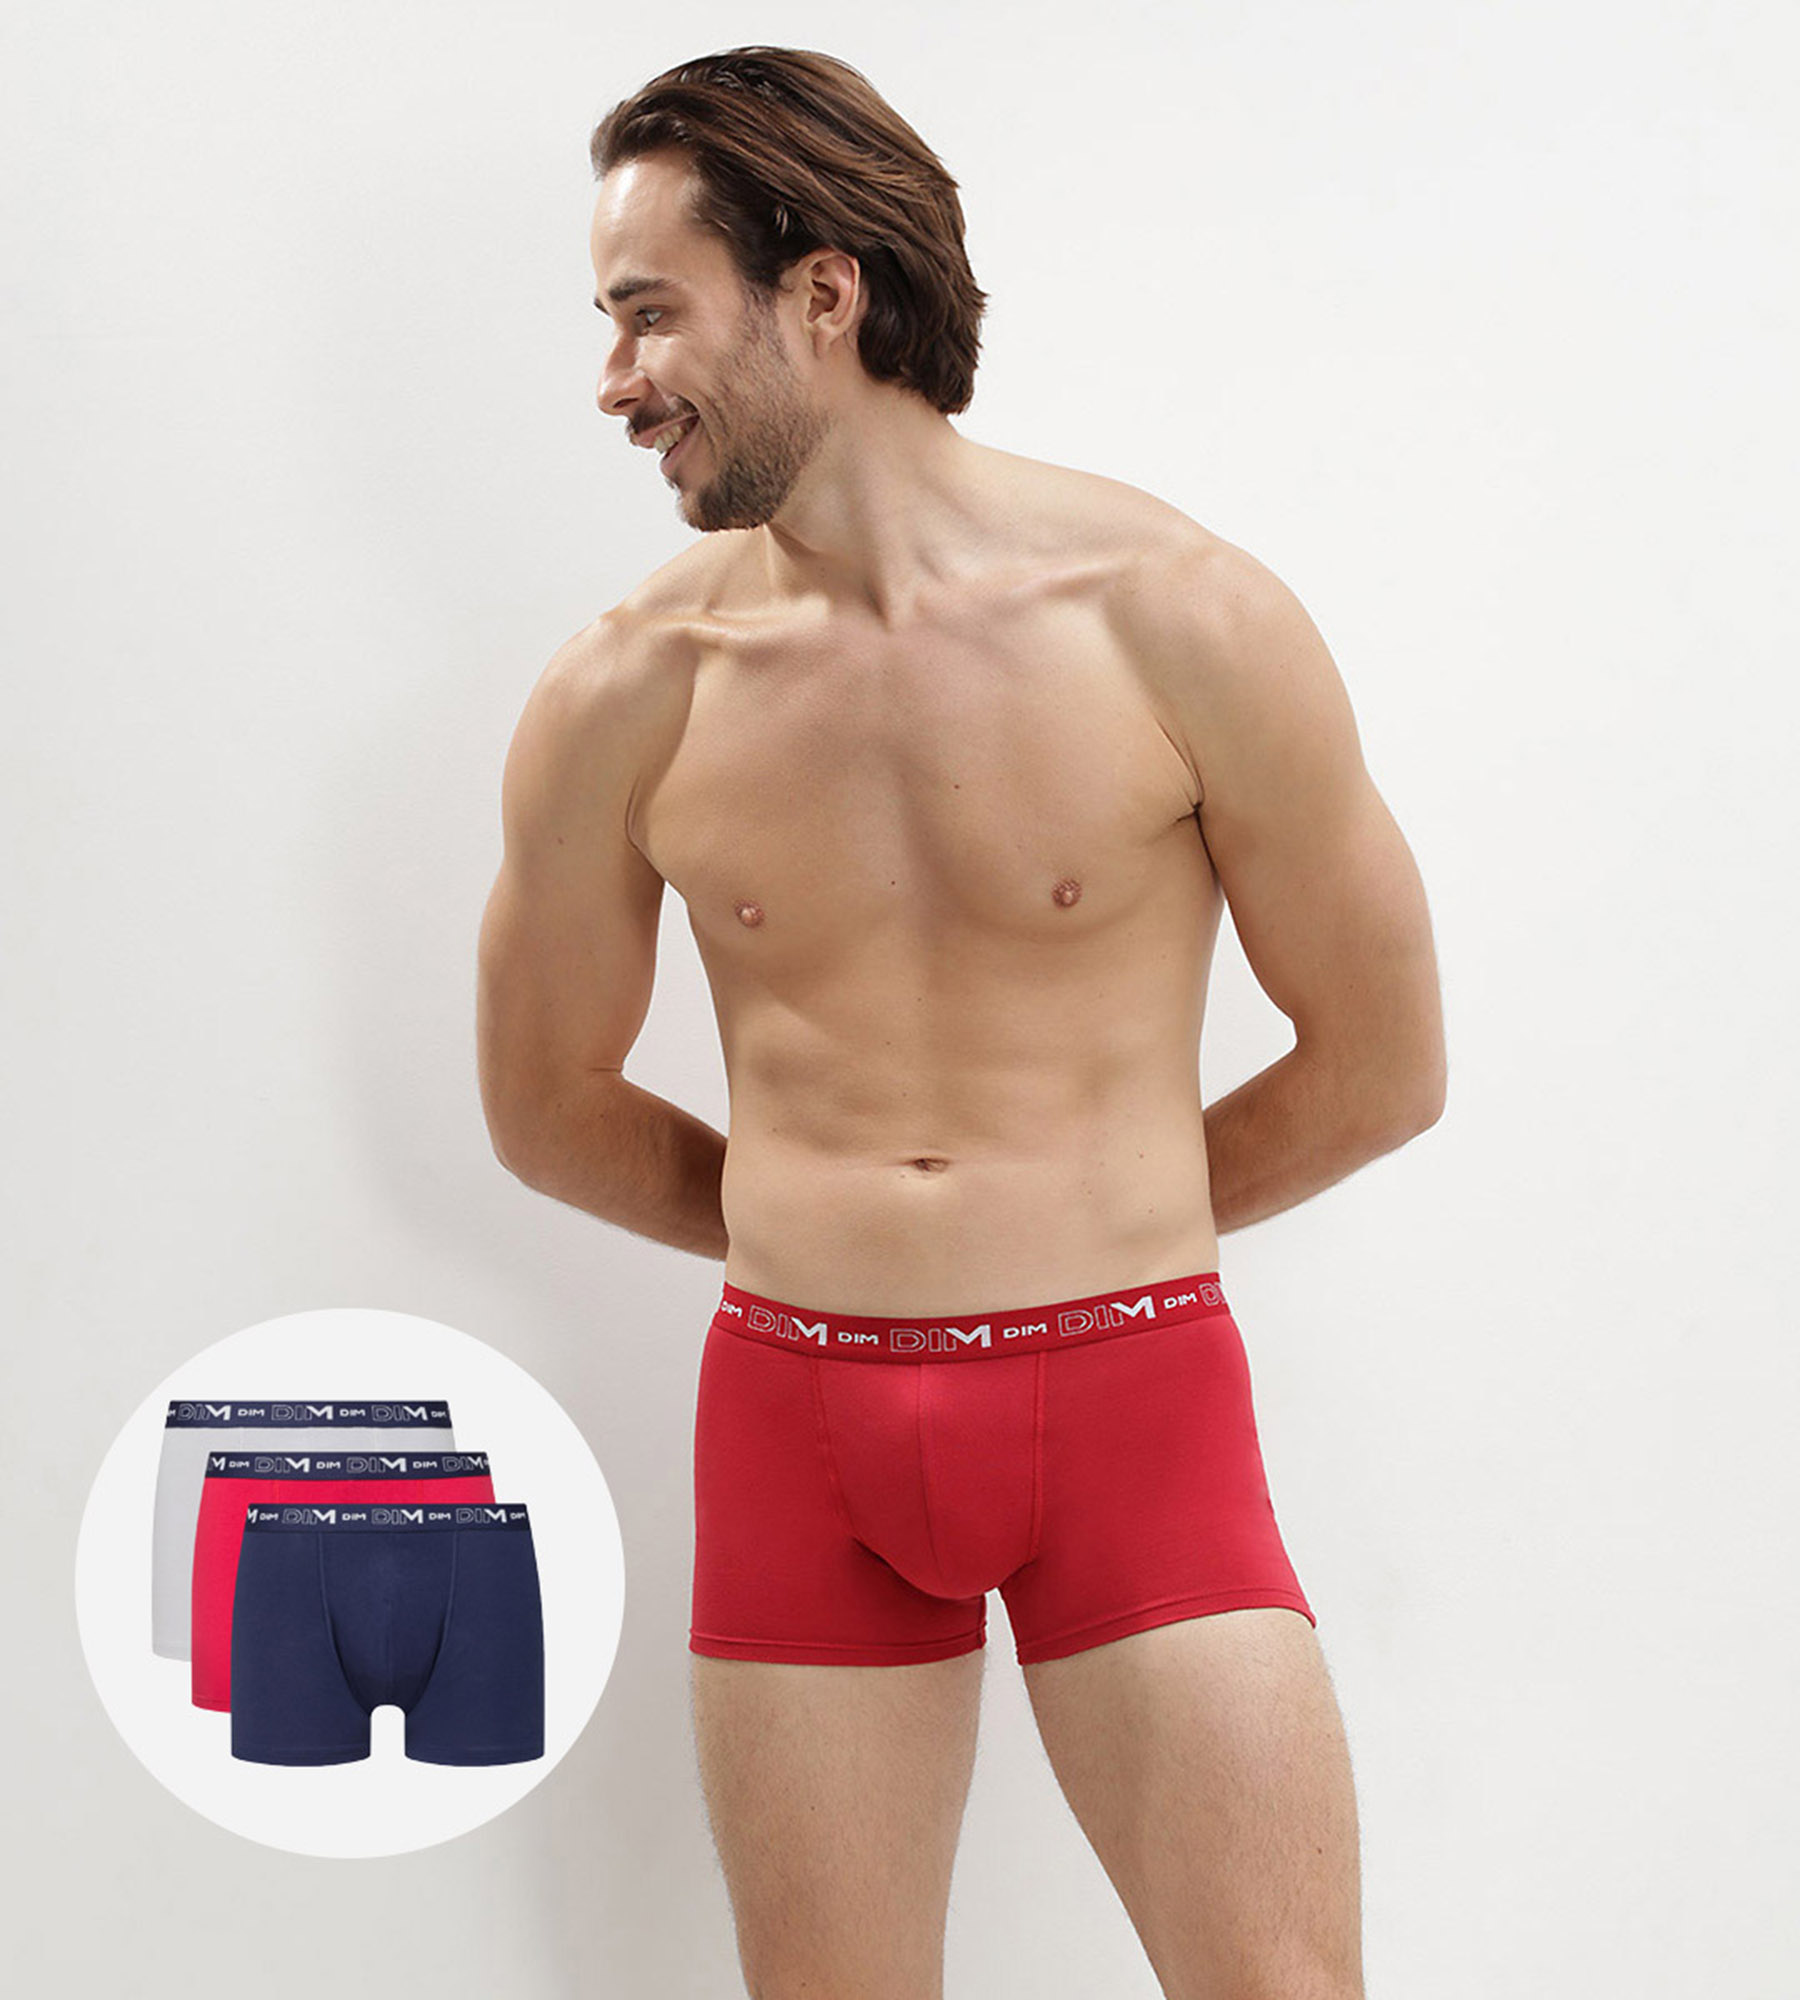 DIM Men's Ecodim Stretch Cotton Fashion & Comfort x4 Boxer, Red